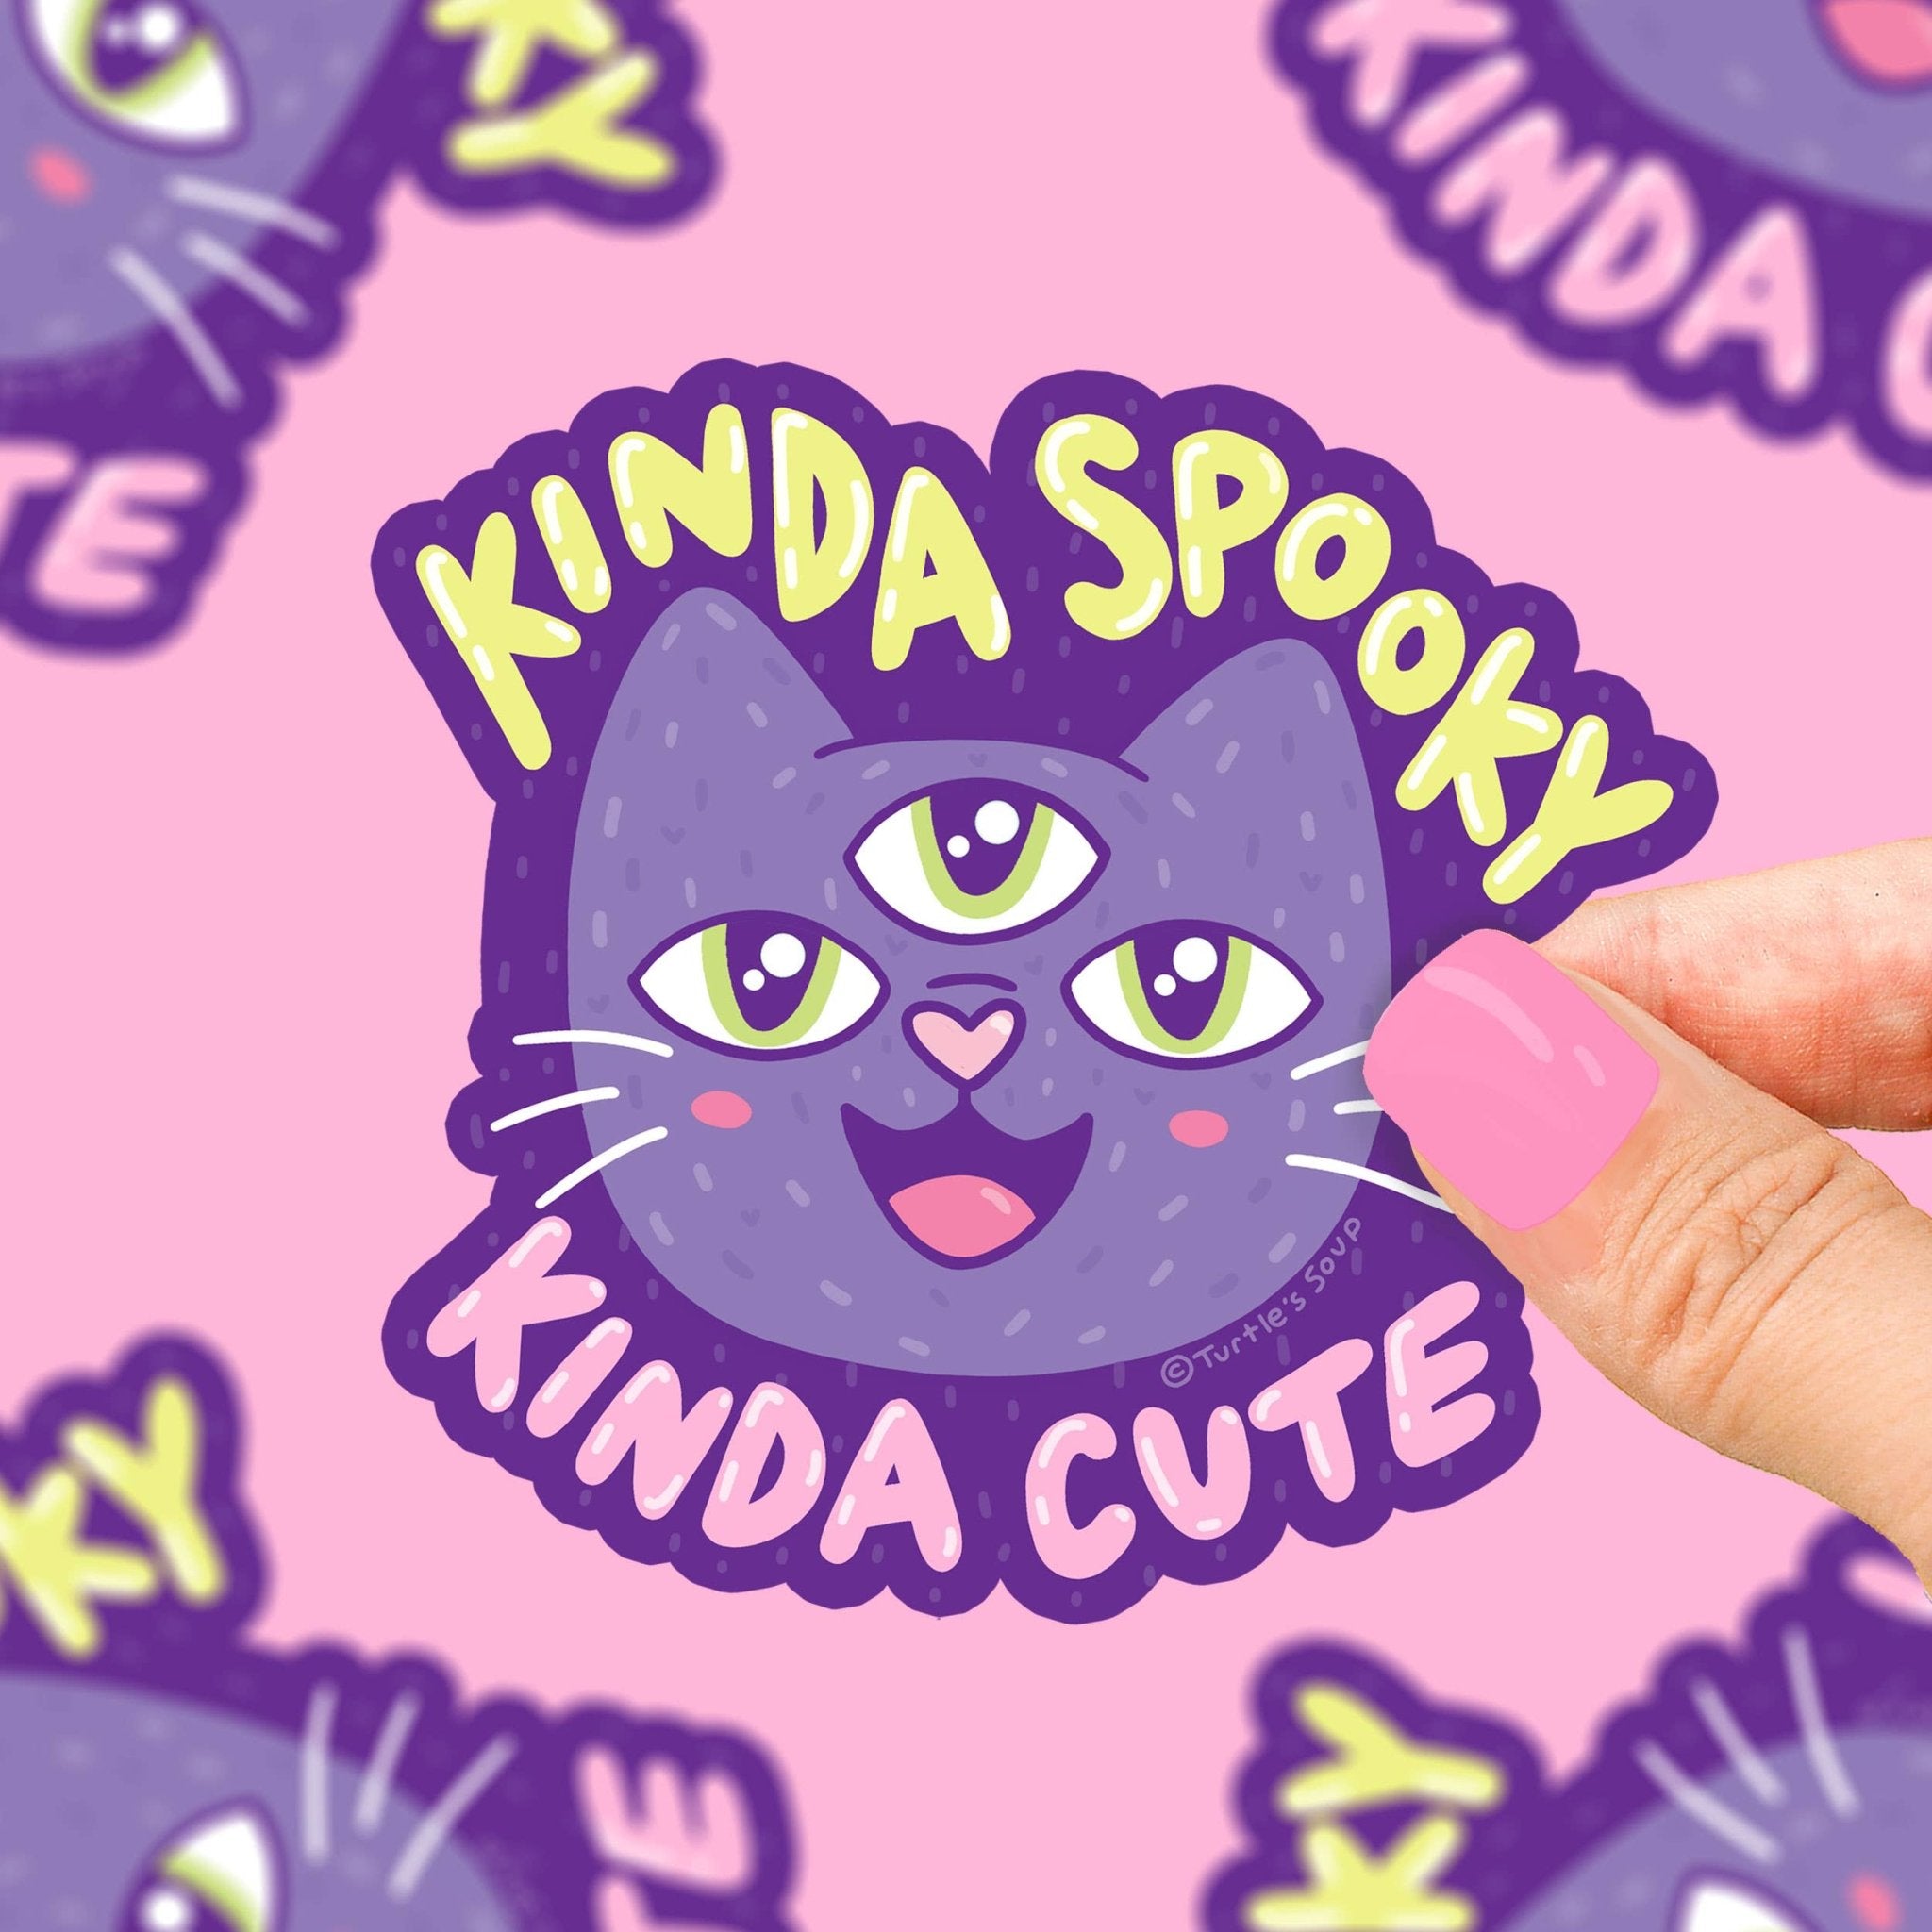 Kinda Spooky Kinda Cute Cat Vinyl Sticker - Spiral Circle